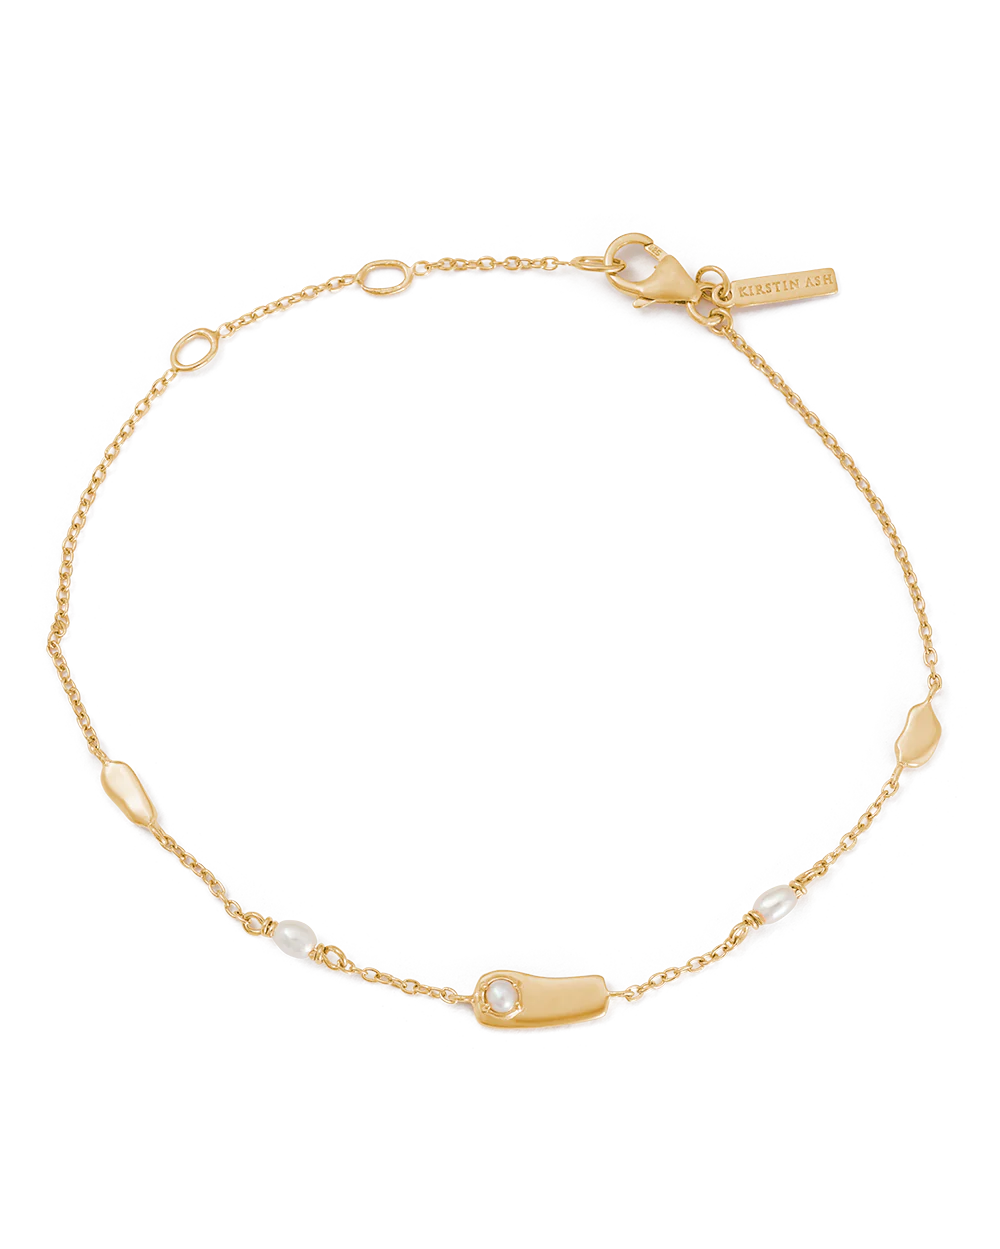 Kirstin Ash Vacanza Bracelet- 18k Gold Vermeil